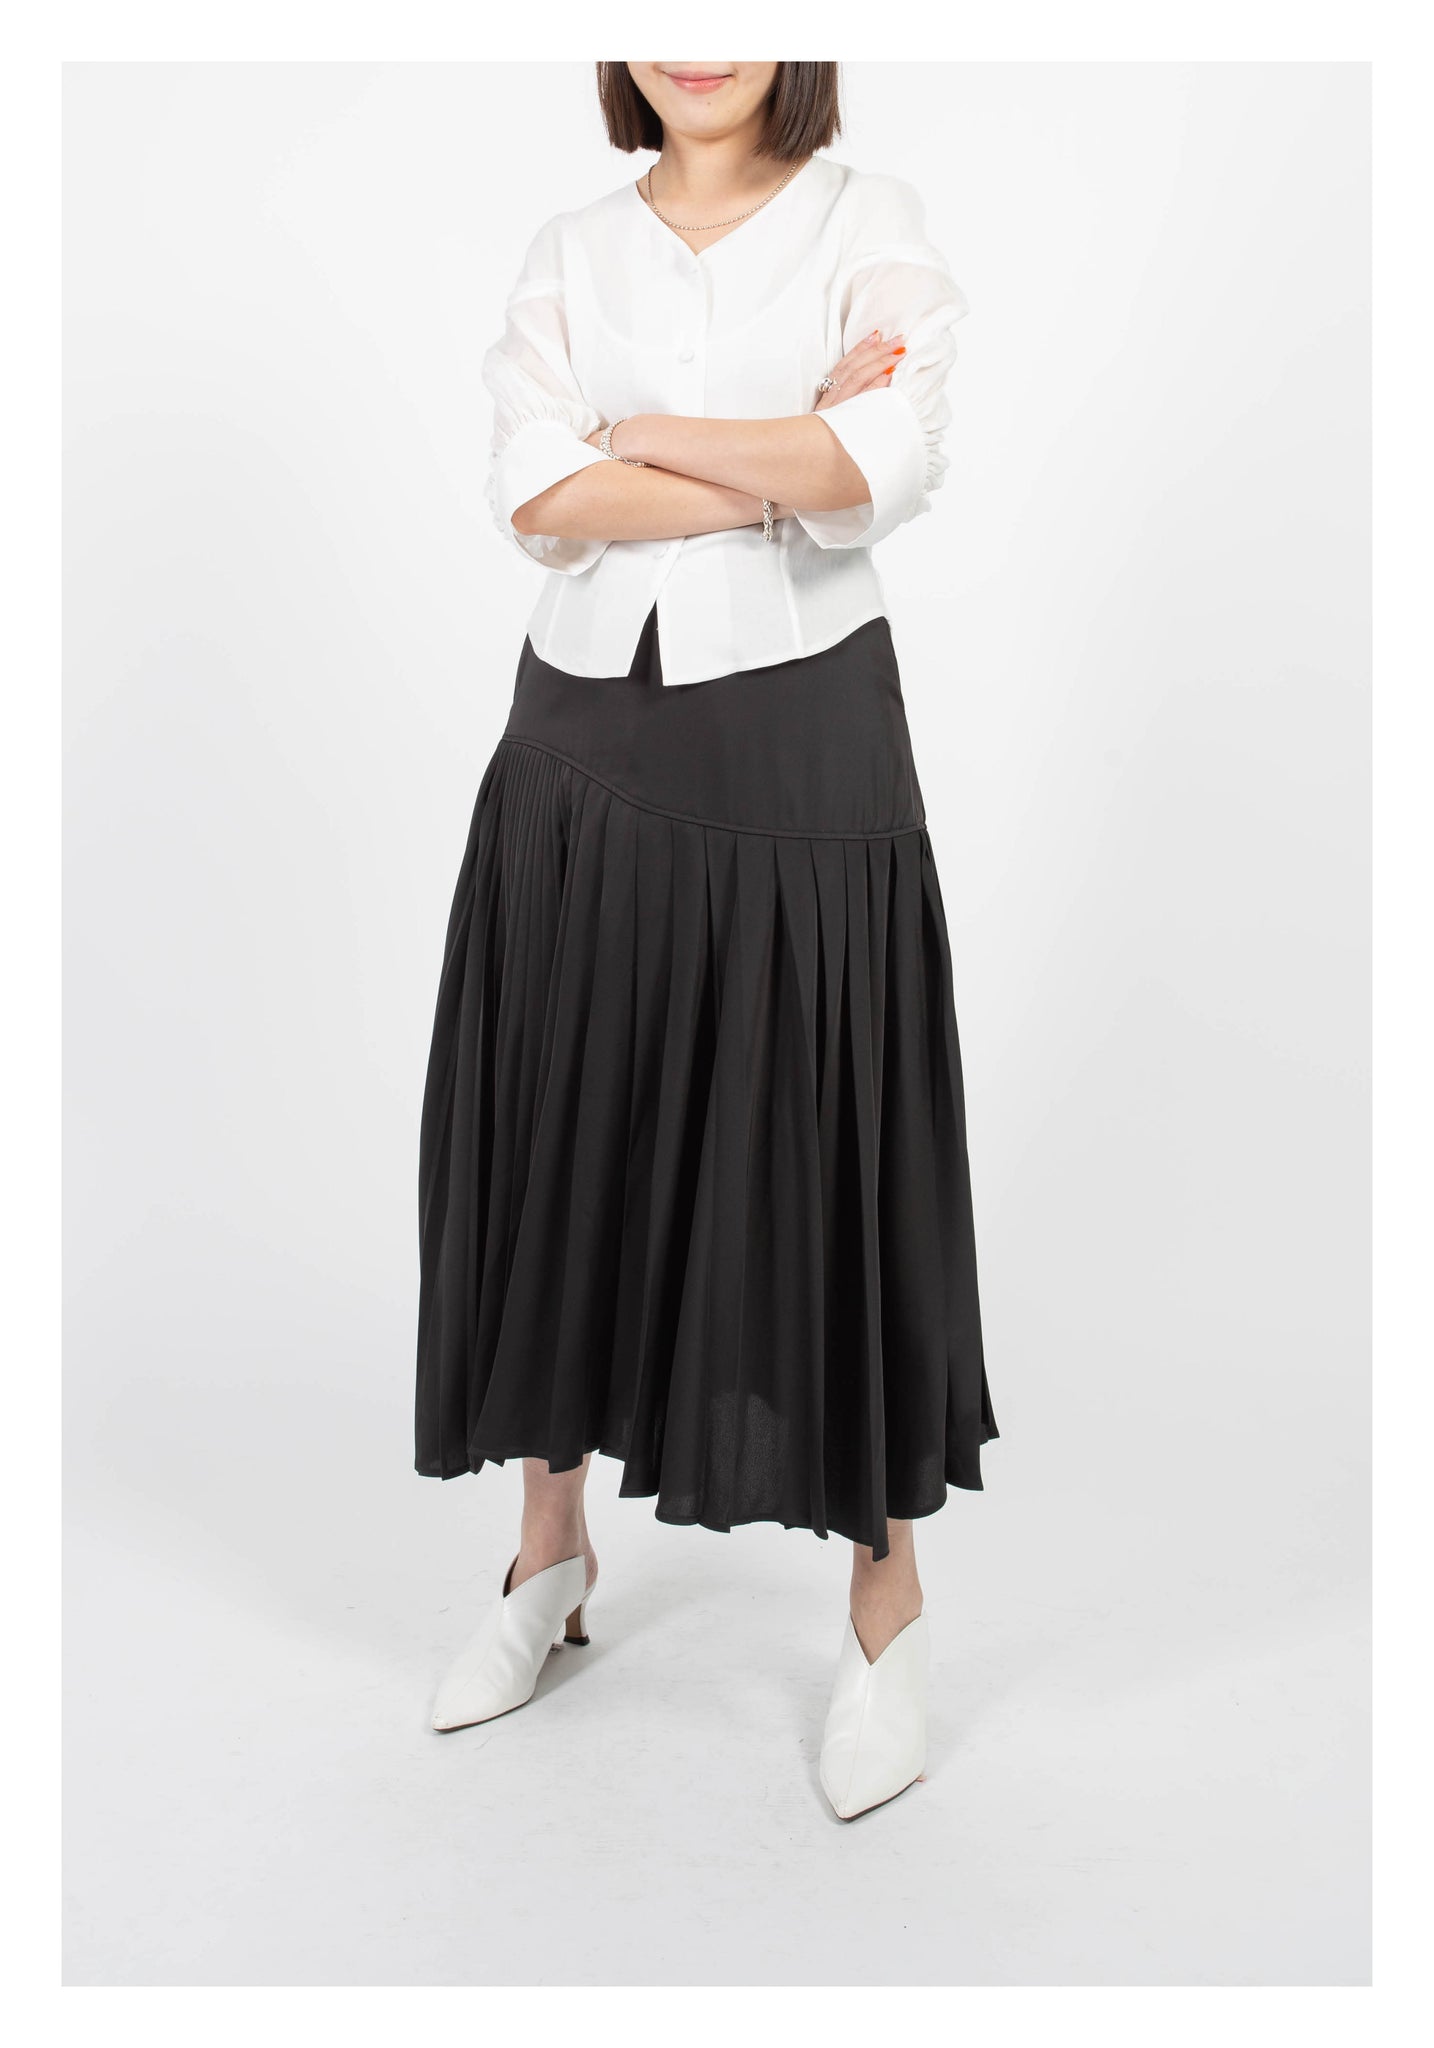 Mixed Pleats Drape Skirt Black